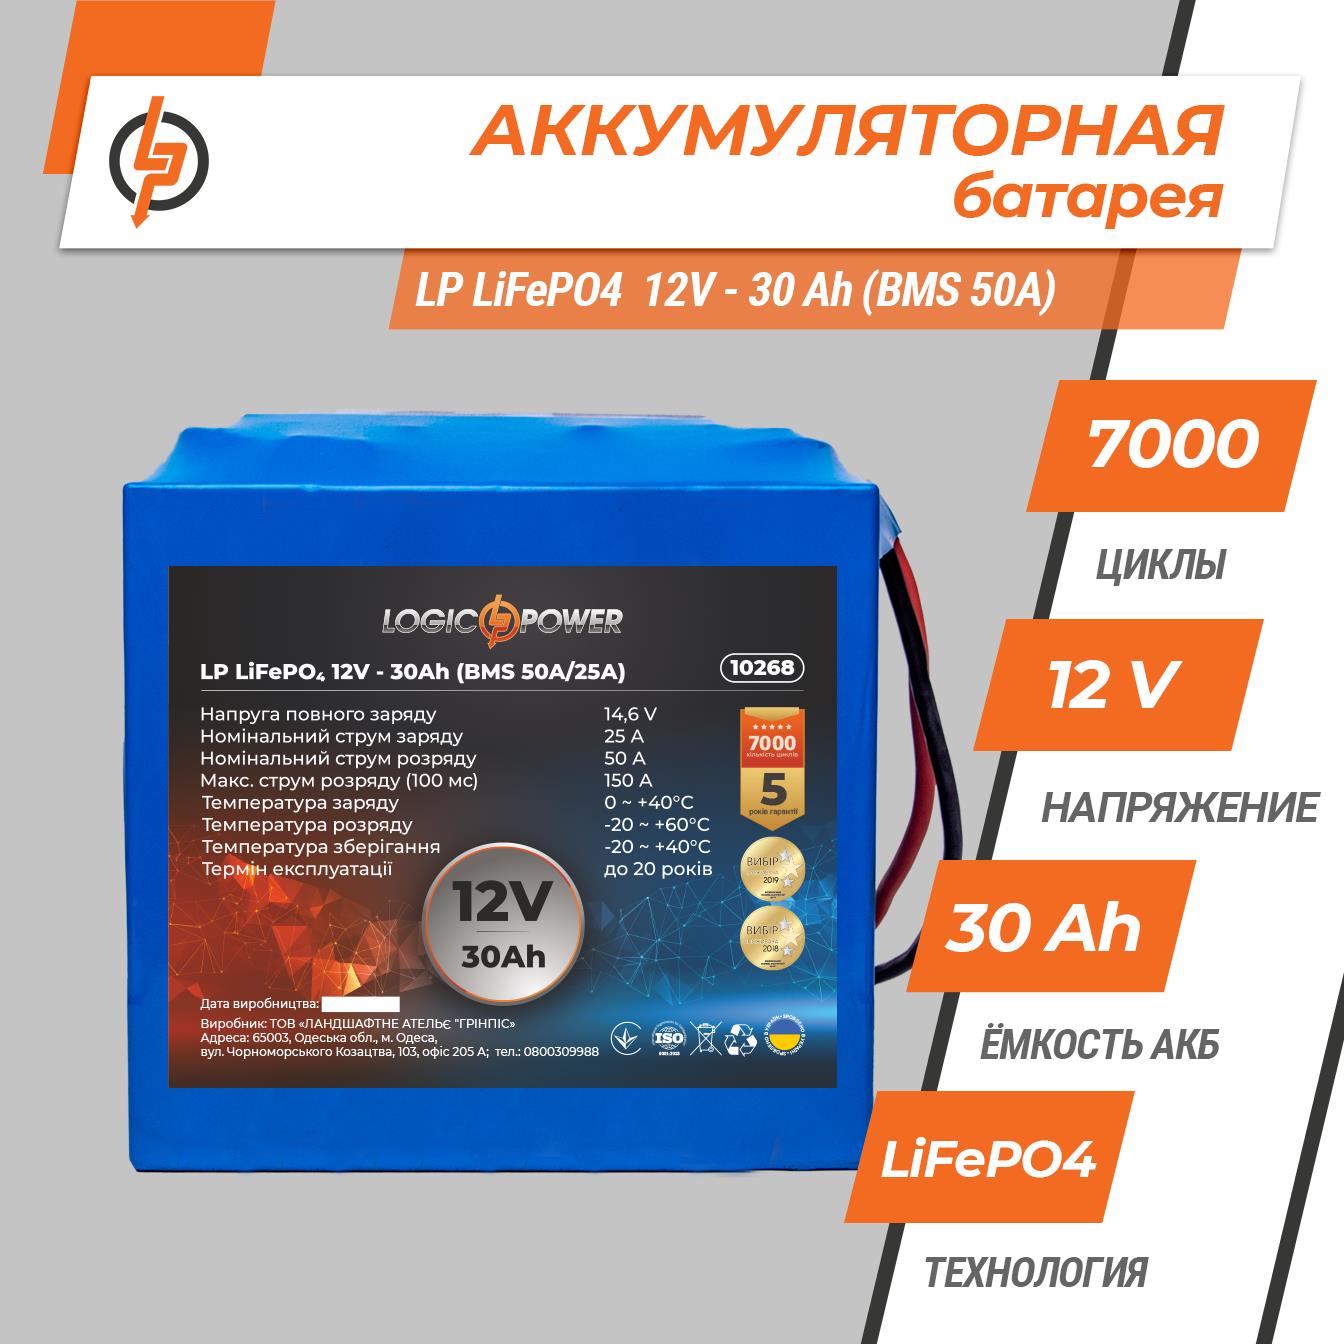 Аккумулятор литий-железо-фосфатный LogicPower LP LiFePO4 12V - 30 Ah (BMS 50A/25A) (10268) цена 6138.00 грн - фотография 2